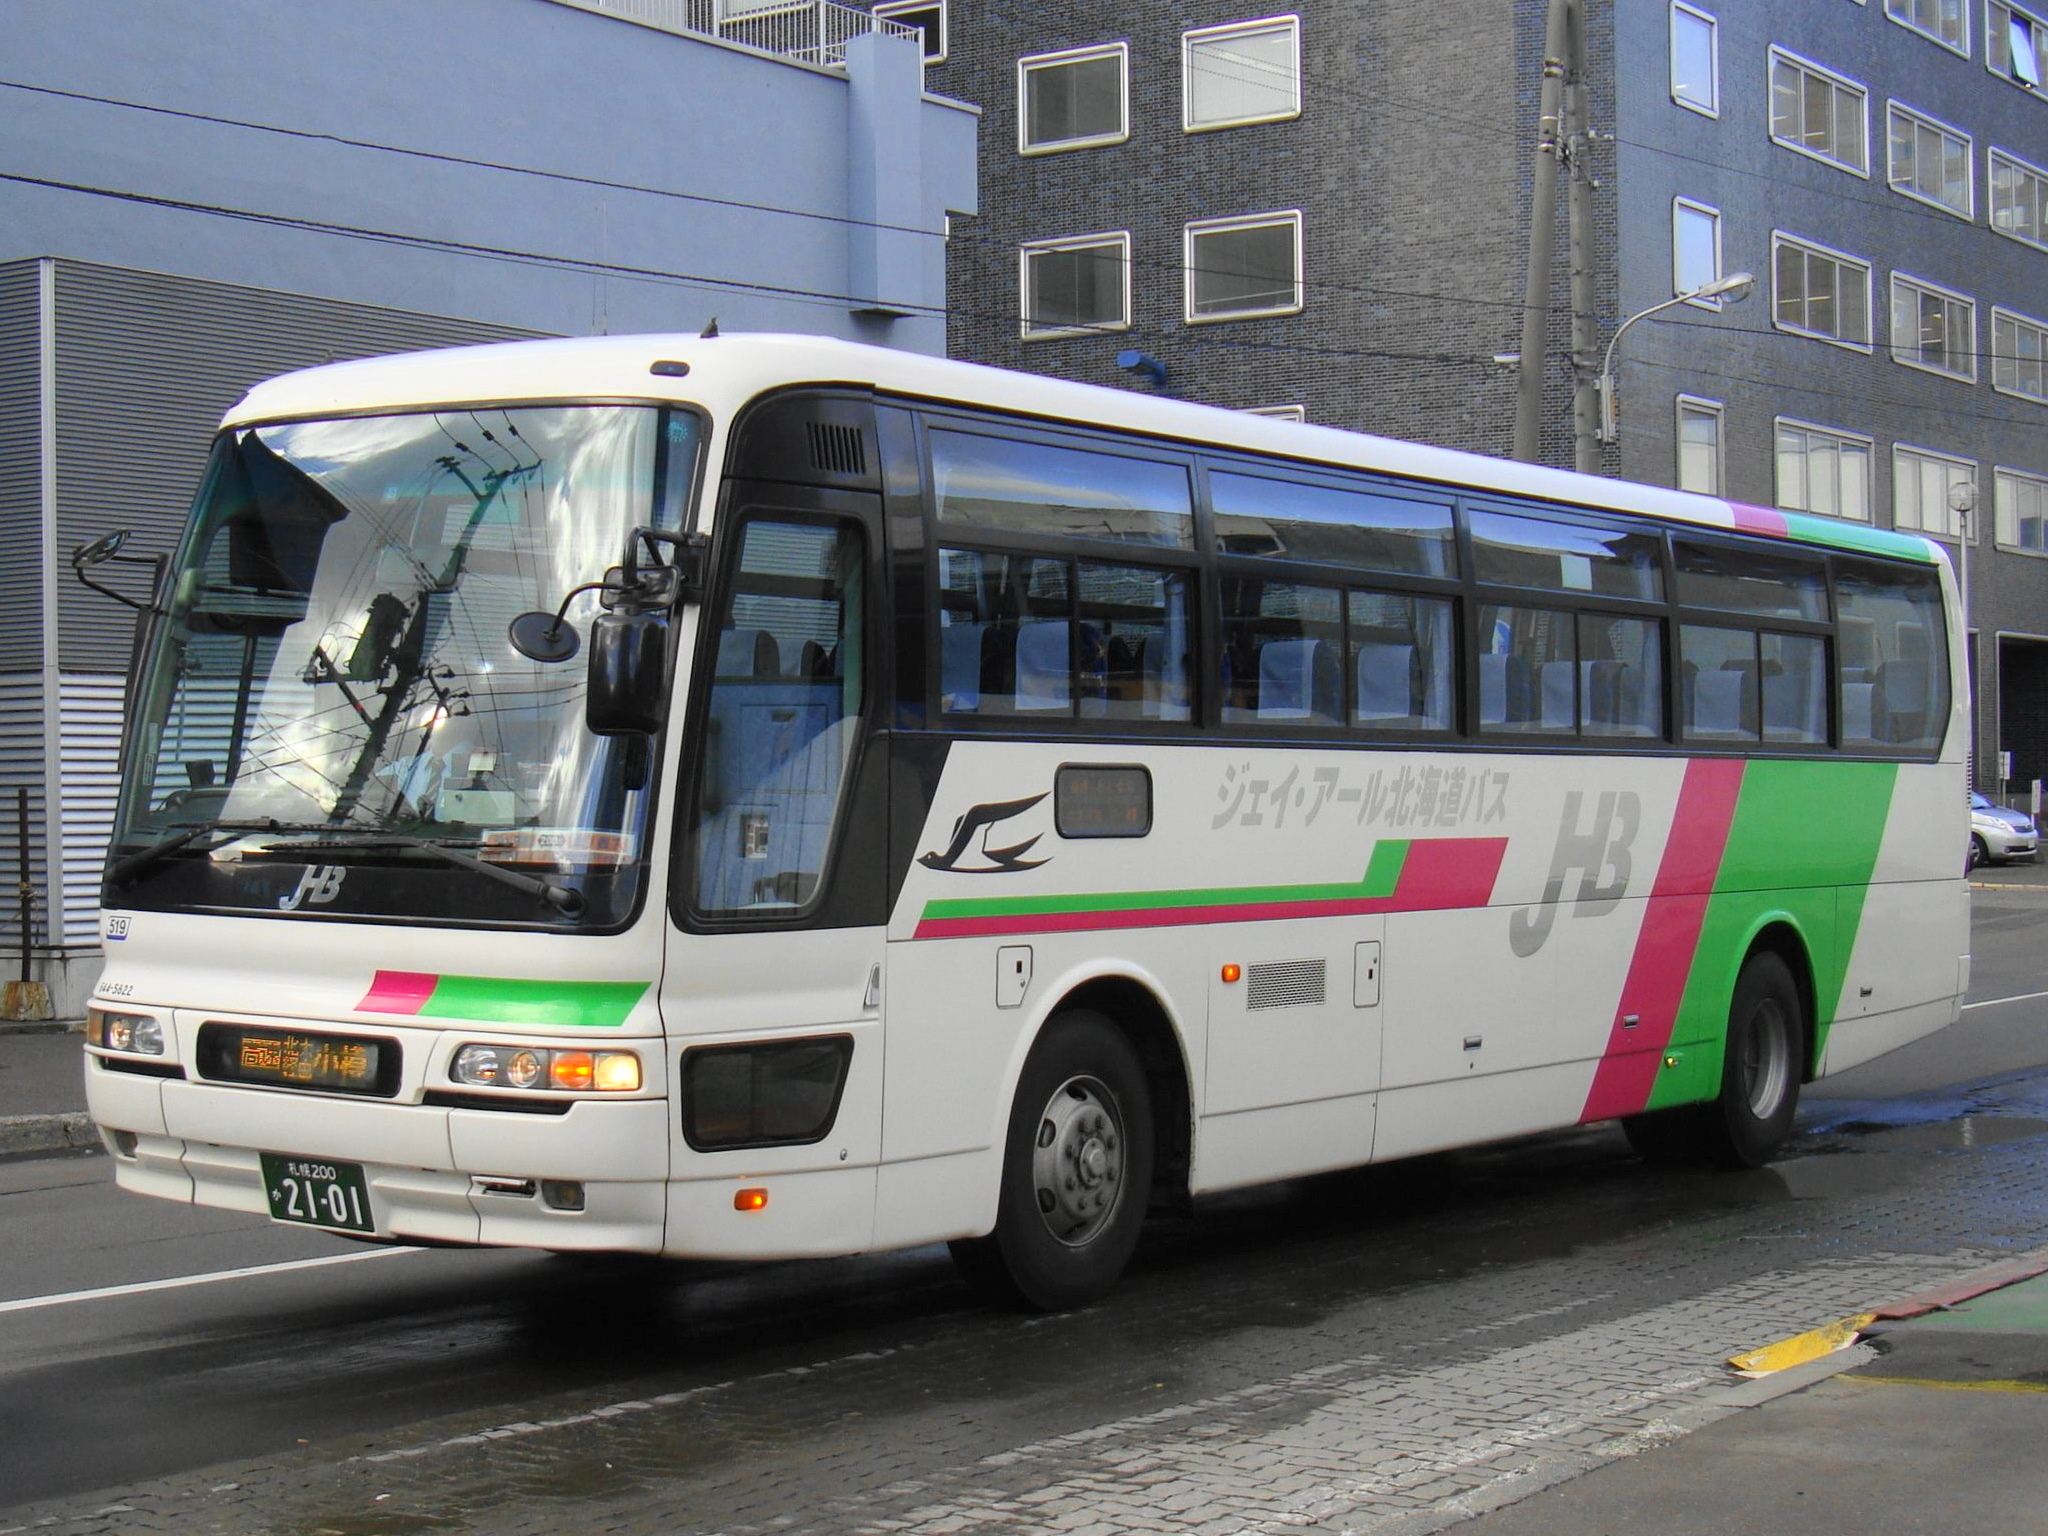 File:JR Hokkaidō bus S200F 2101.JPG - Wikipedia